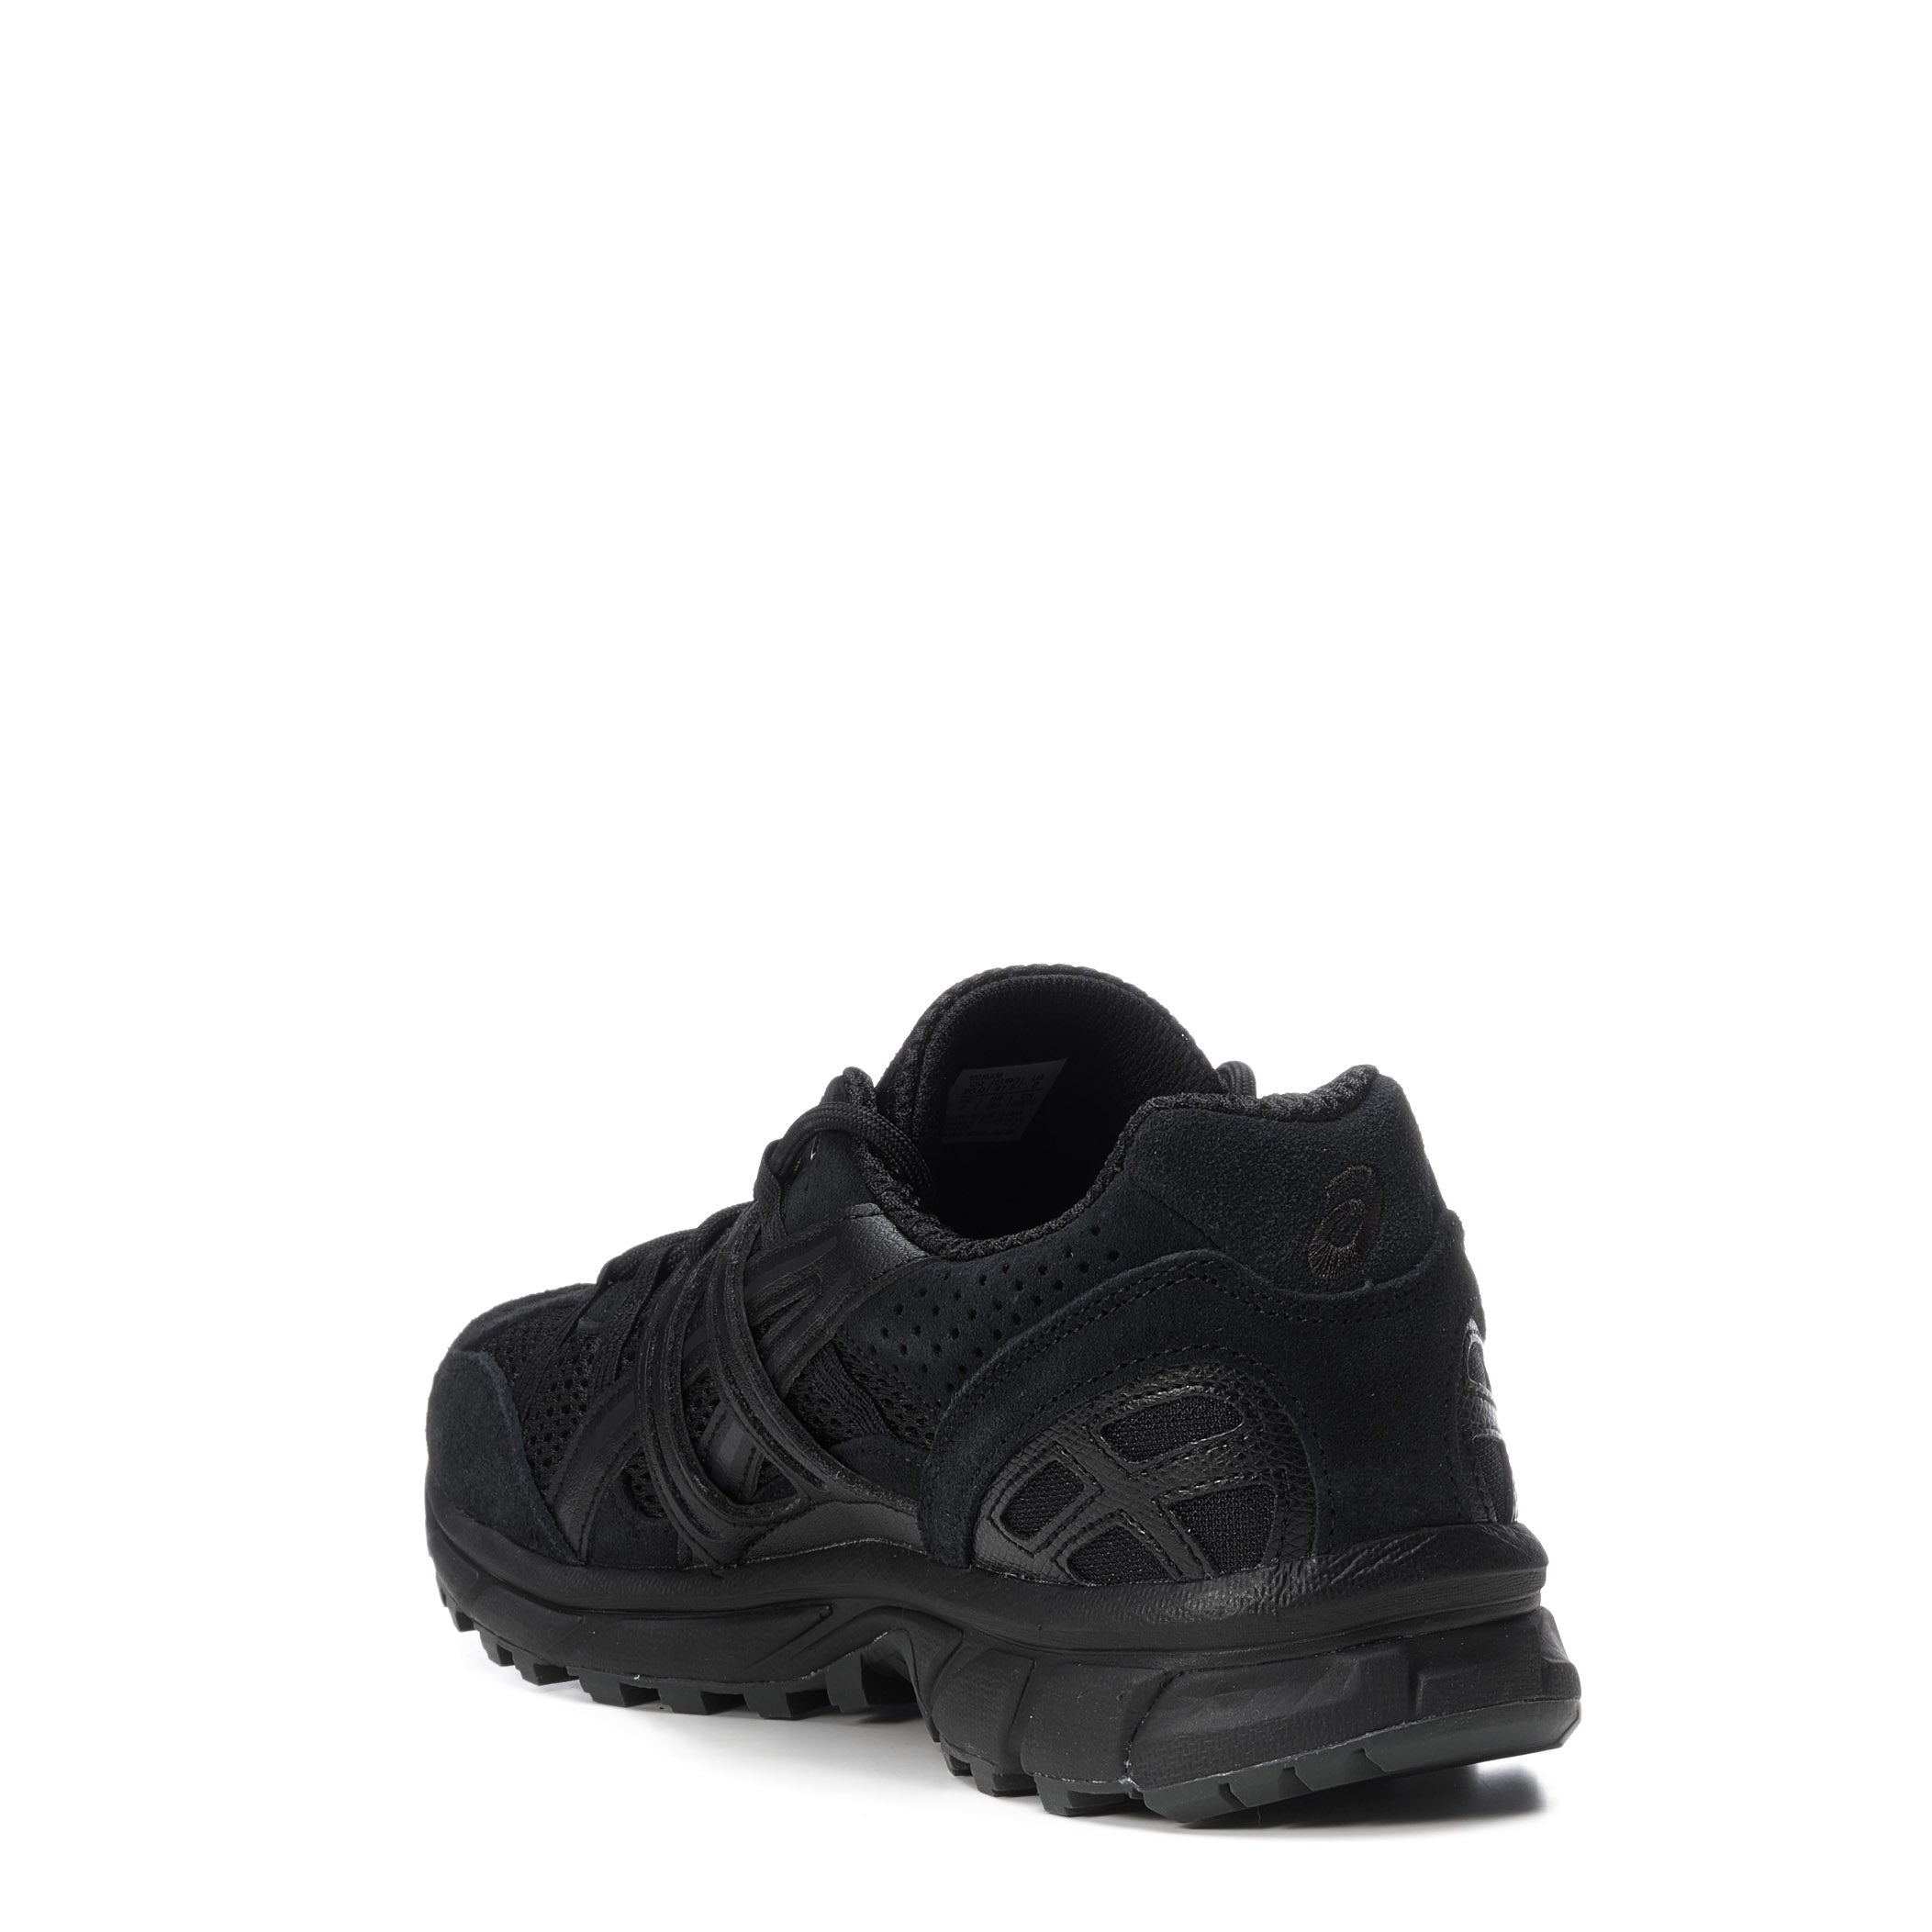 Sneaker total black